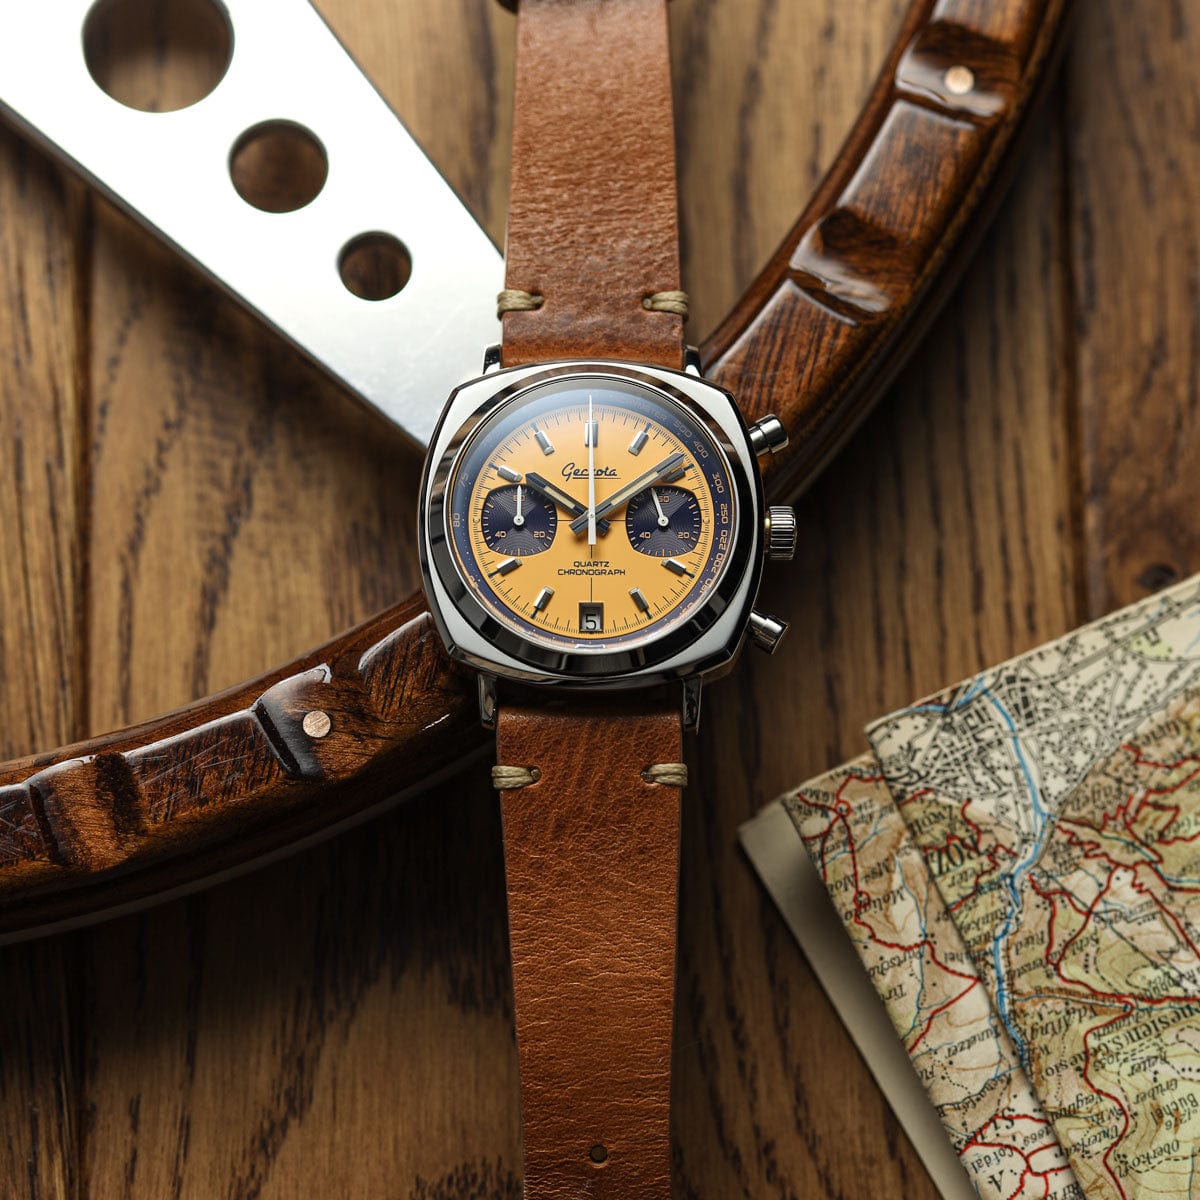 Geckota Chronotimer Yellow Dial Chronograph Watch - LIKE NEW